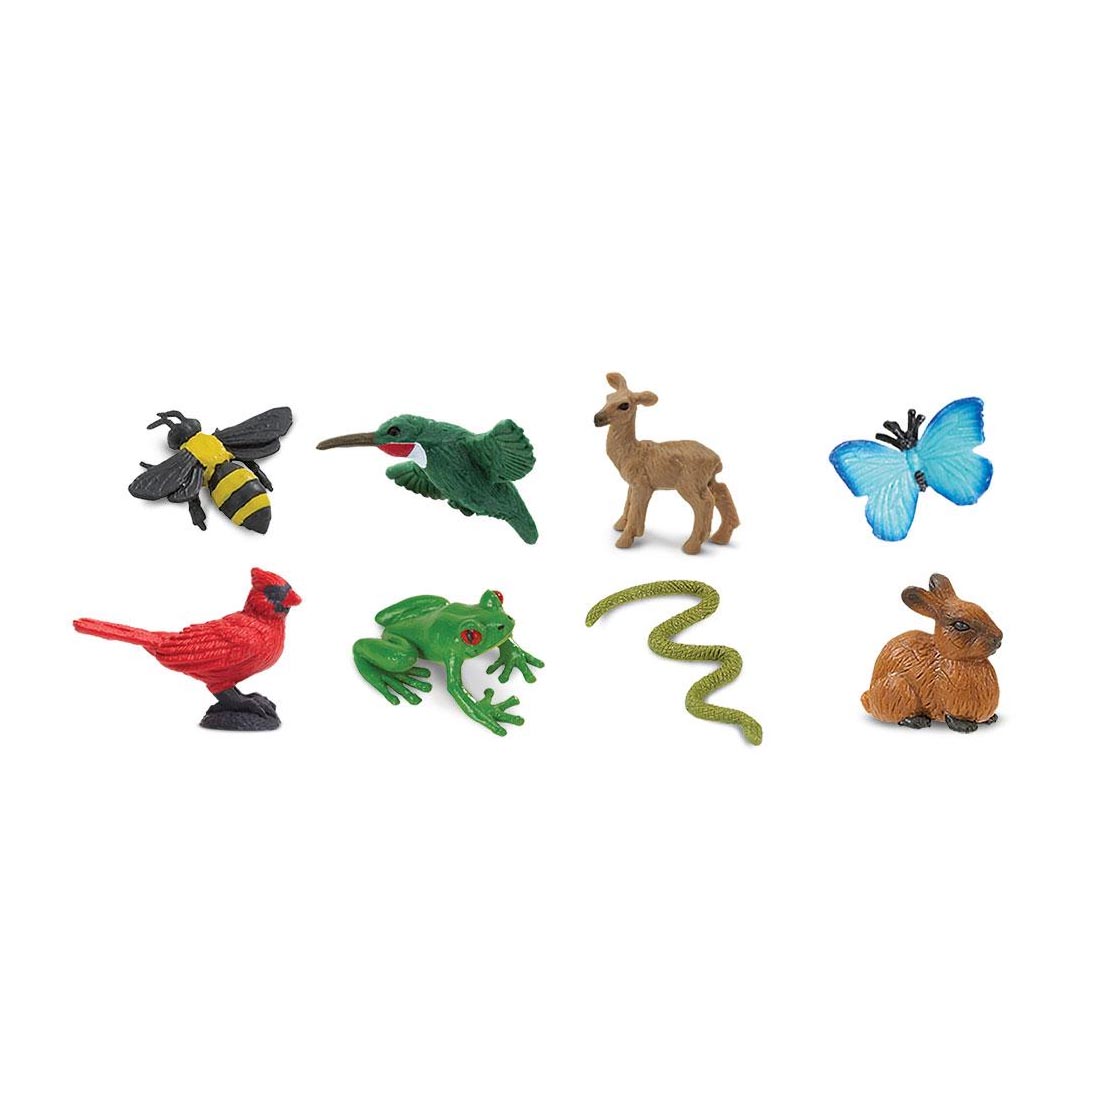 Backyard Mini Figurines include bee, hummingbird, deer, butterfly, cardinal, frog, snake and rabbit